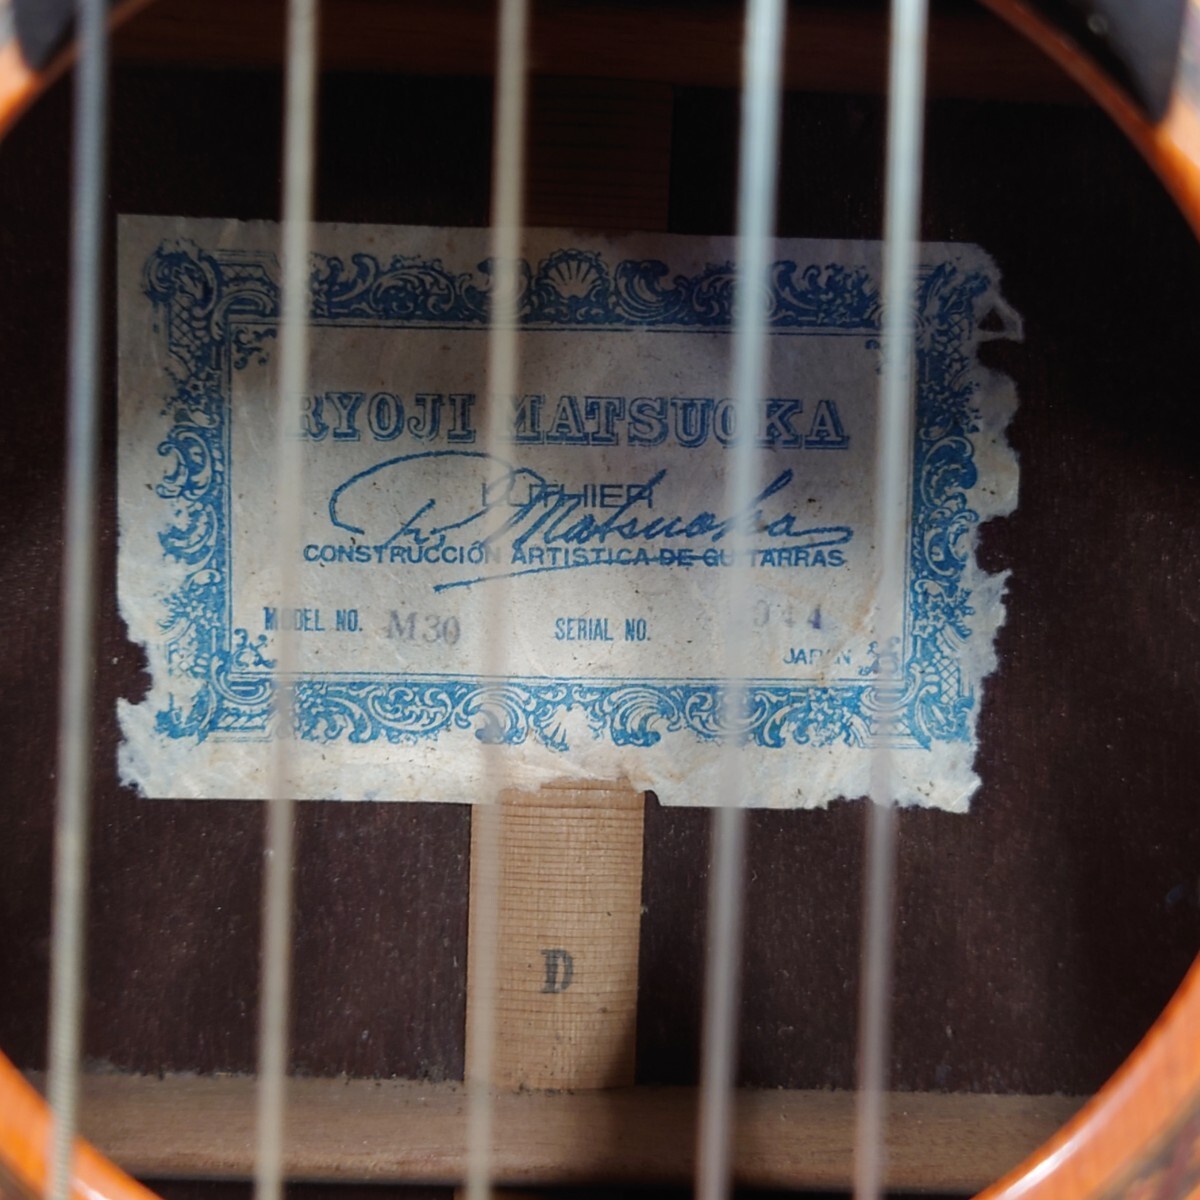 I989 guitar acoustic guitar RYOJI MATSUOKA M30 stringed instruments akogi pine hill good . used junk with translation 